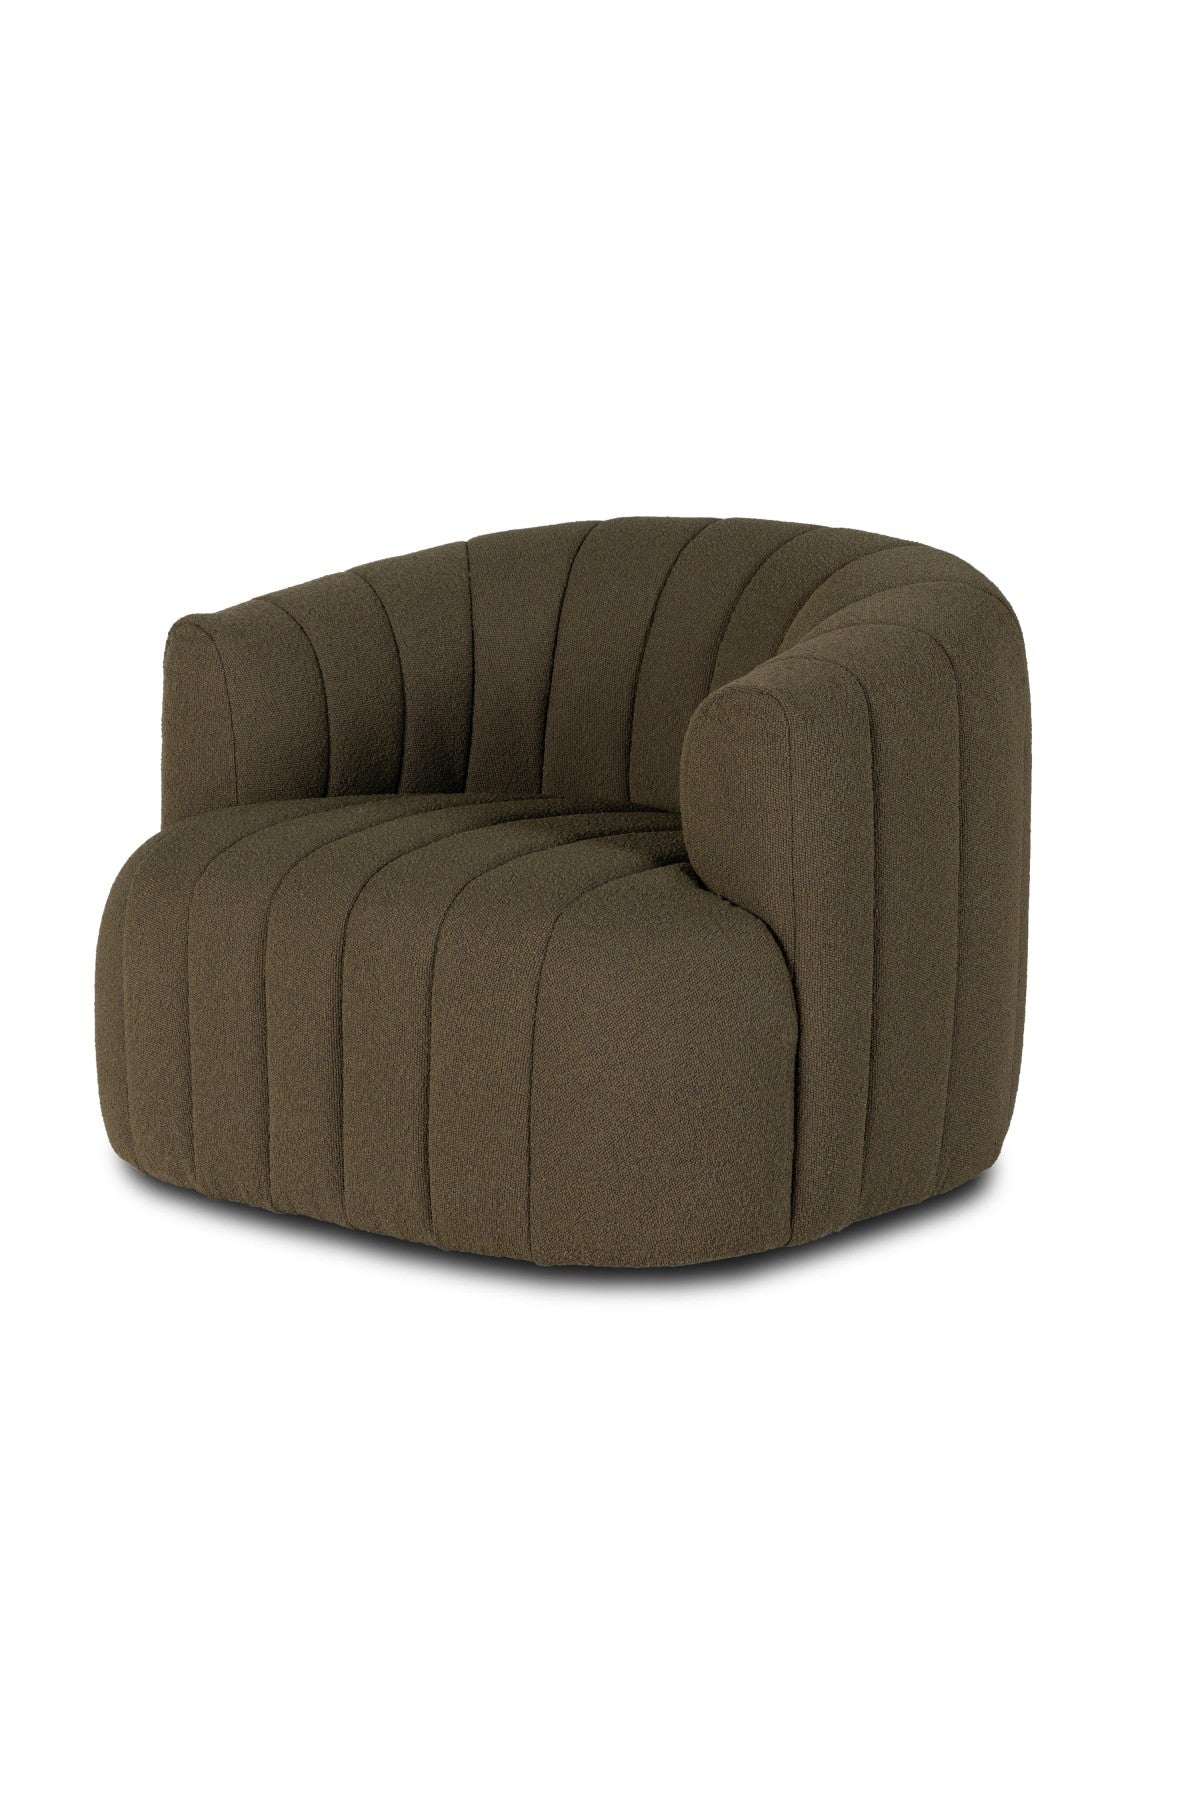 Devon Swivel Chair - 3 Colors